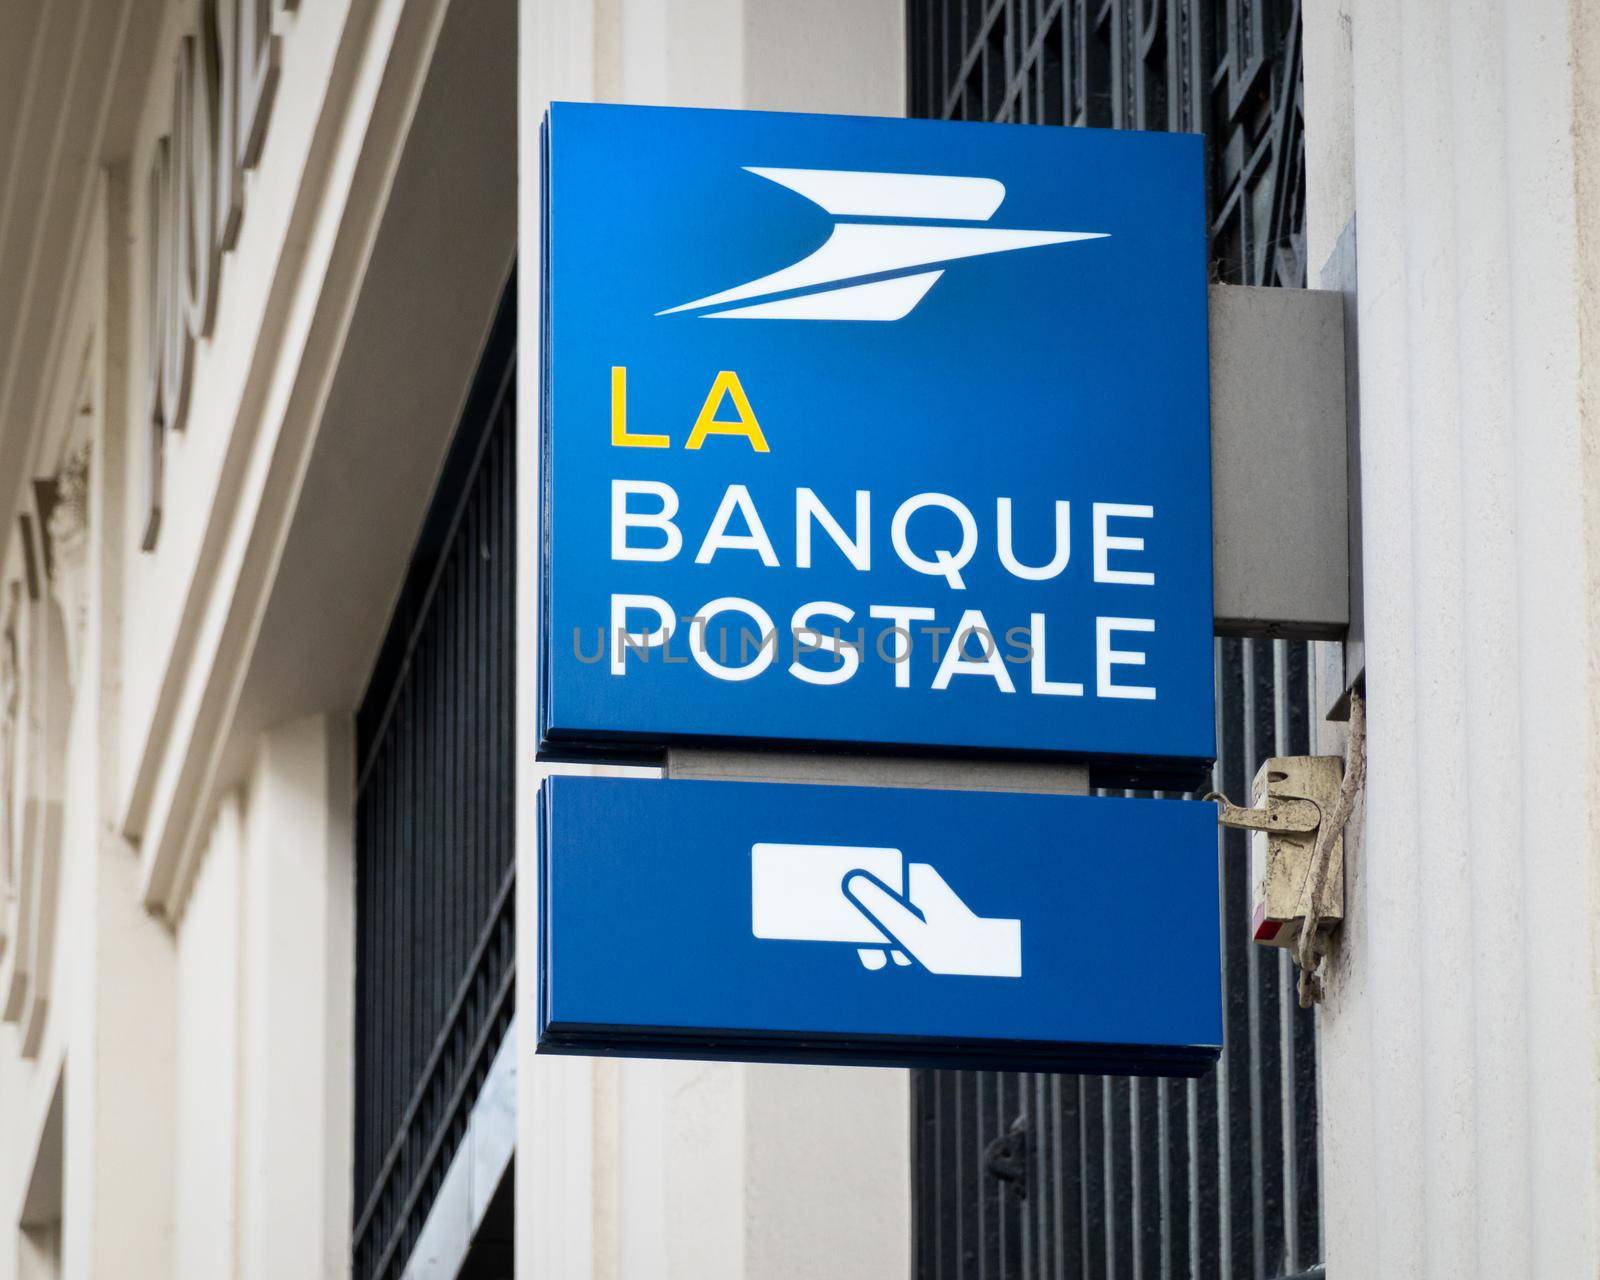 La Banque Postale sign in Bayonne, France by dutourdumonde